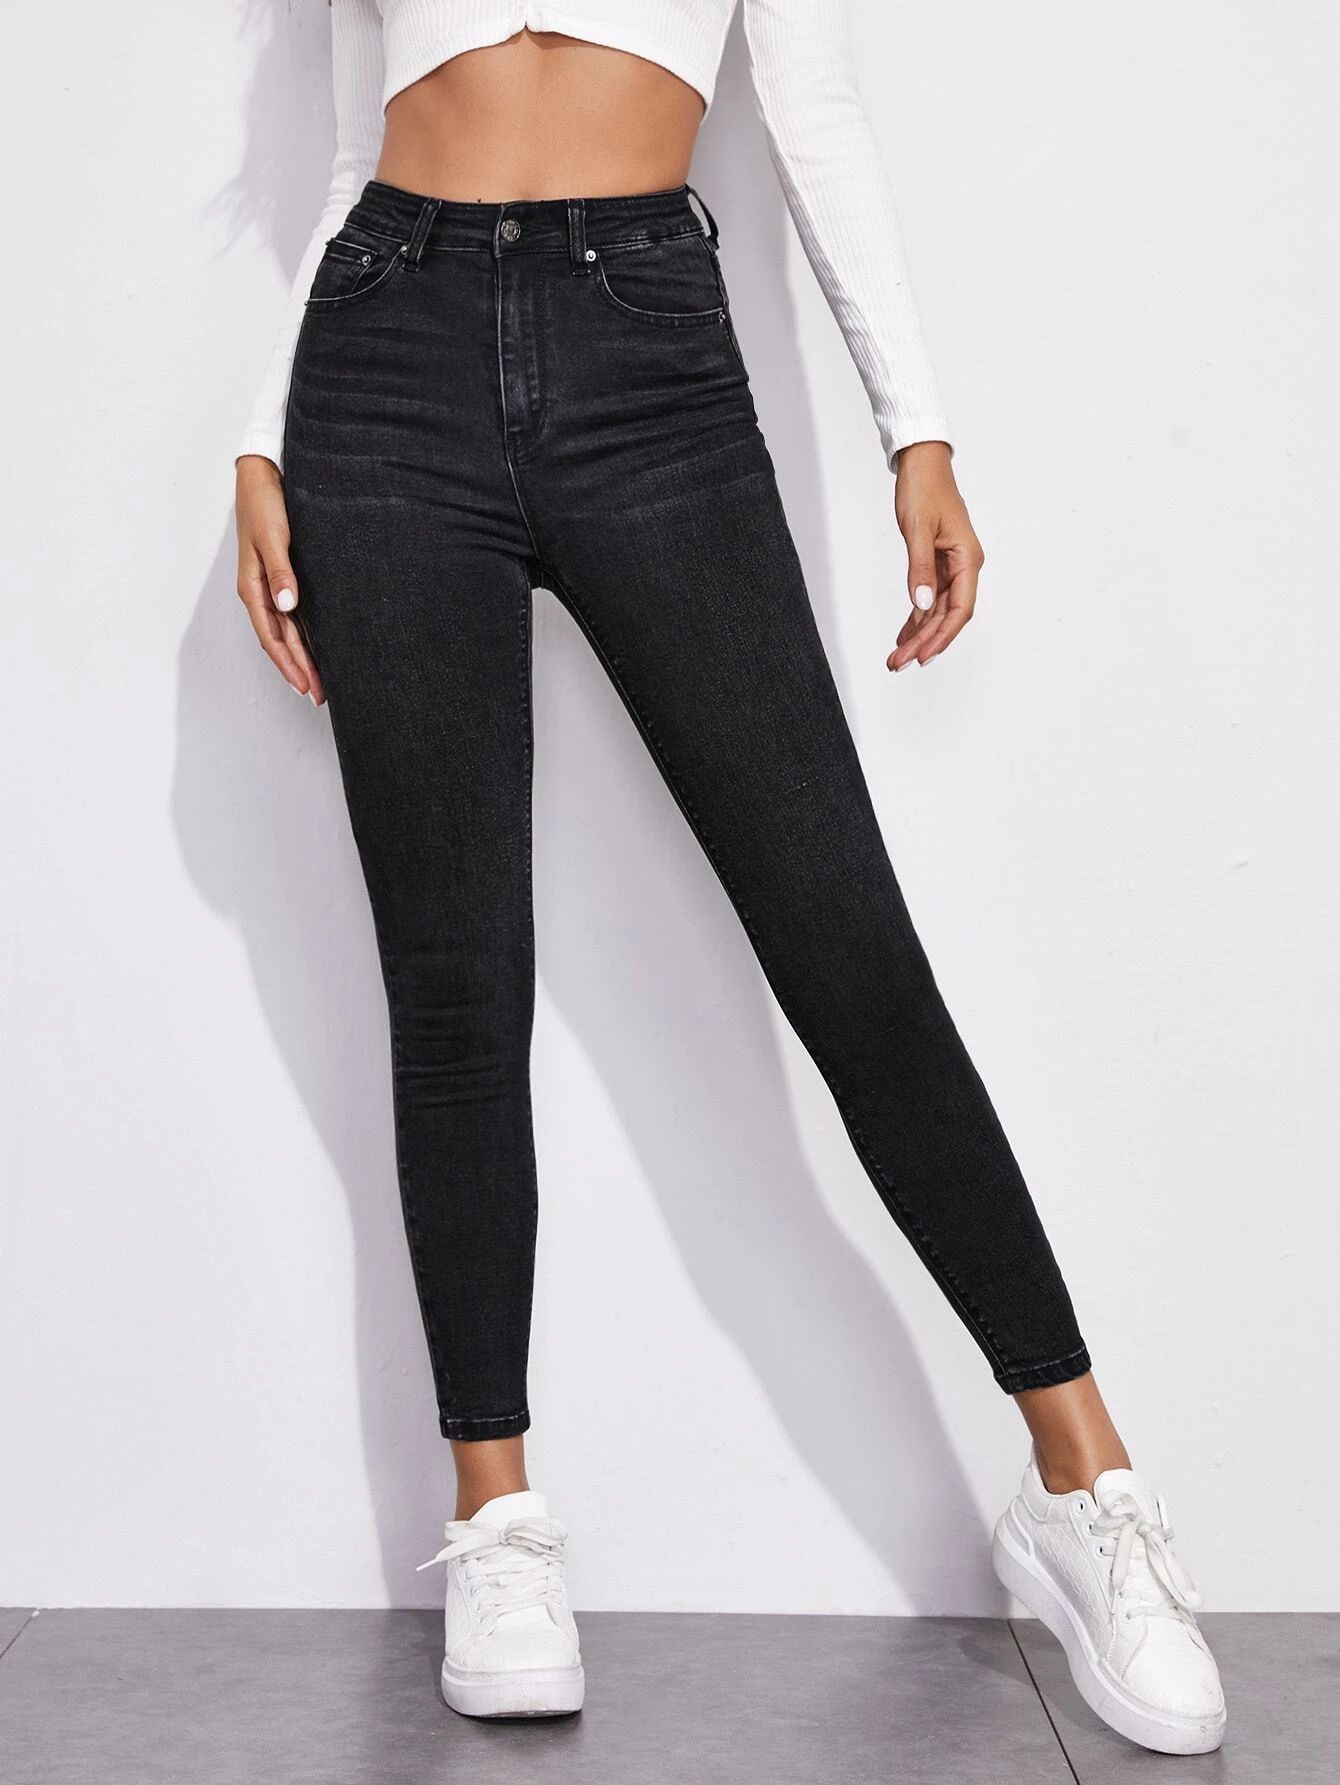 Black Wash Cropped Skinny Jeans | SHEIN